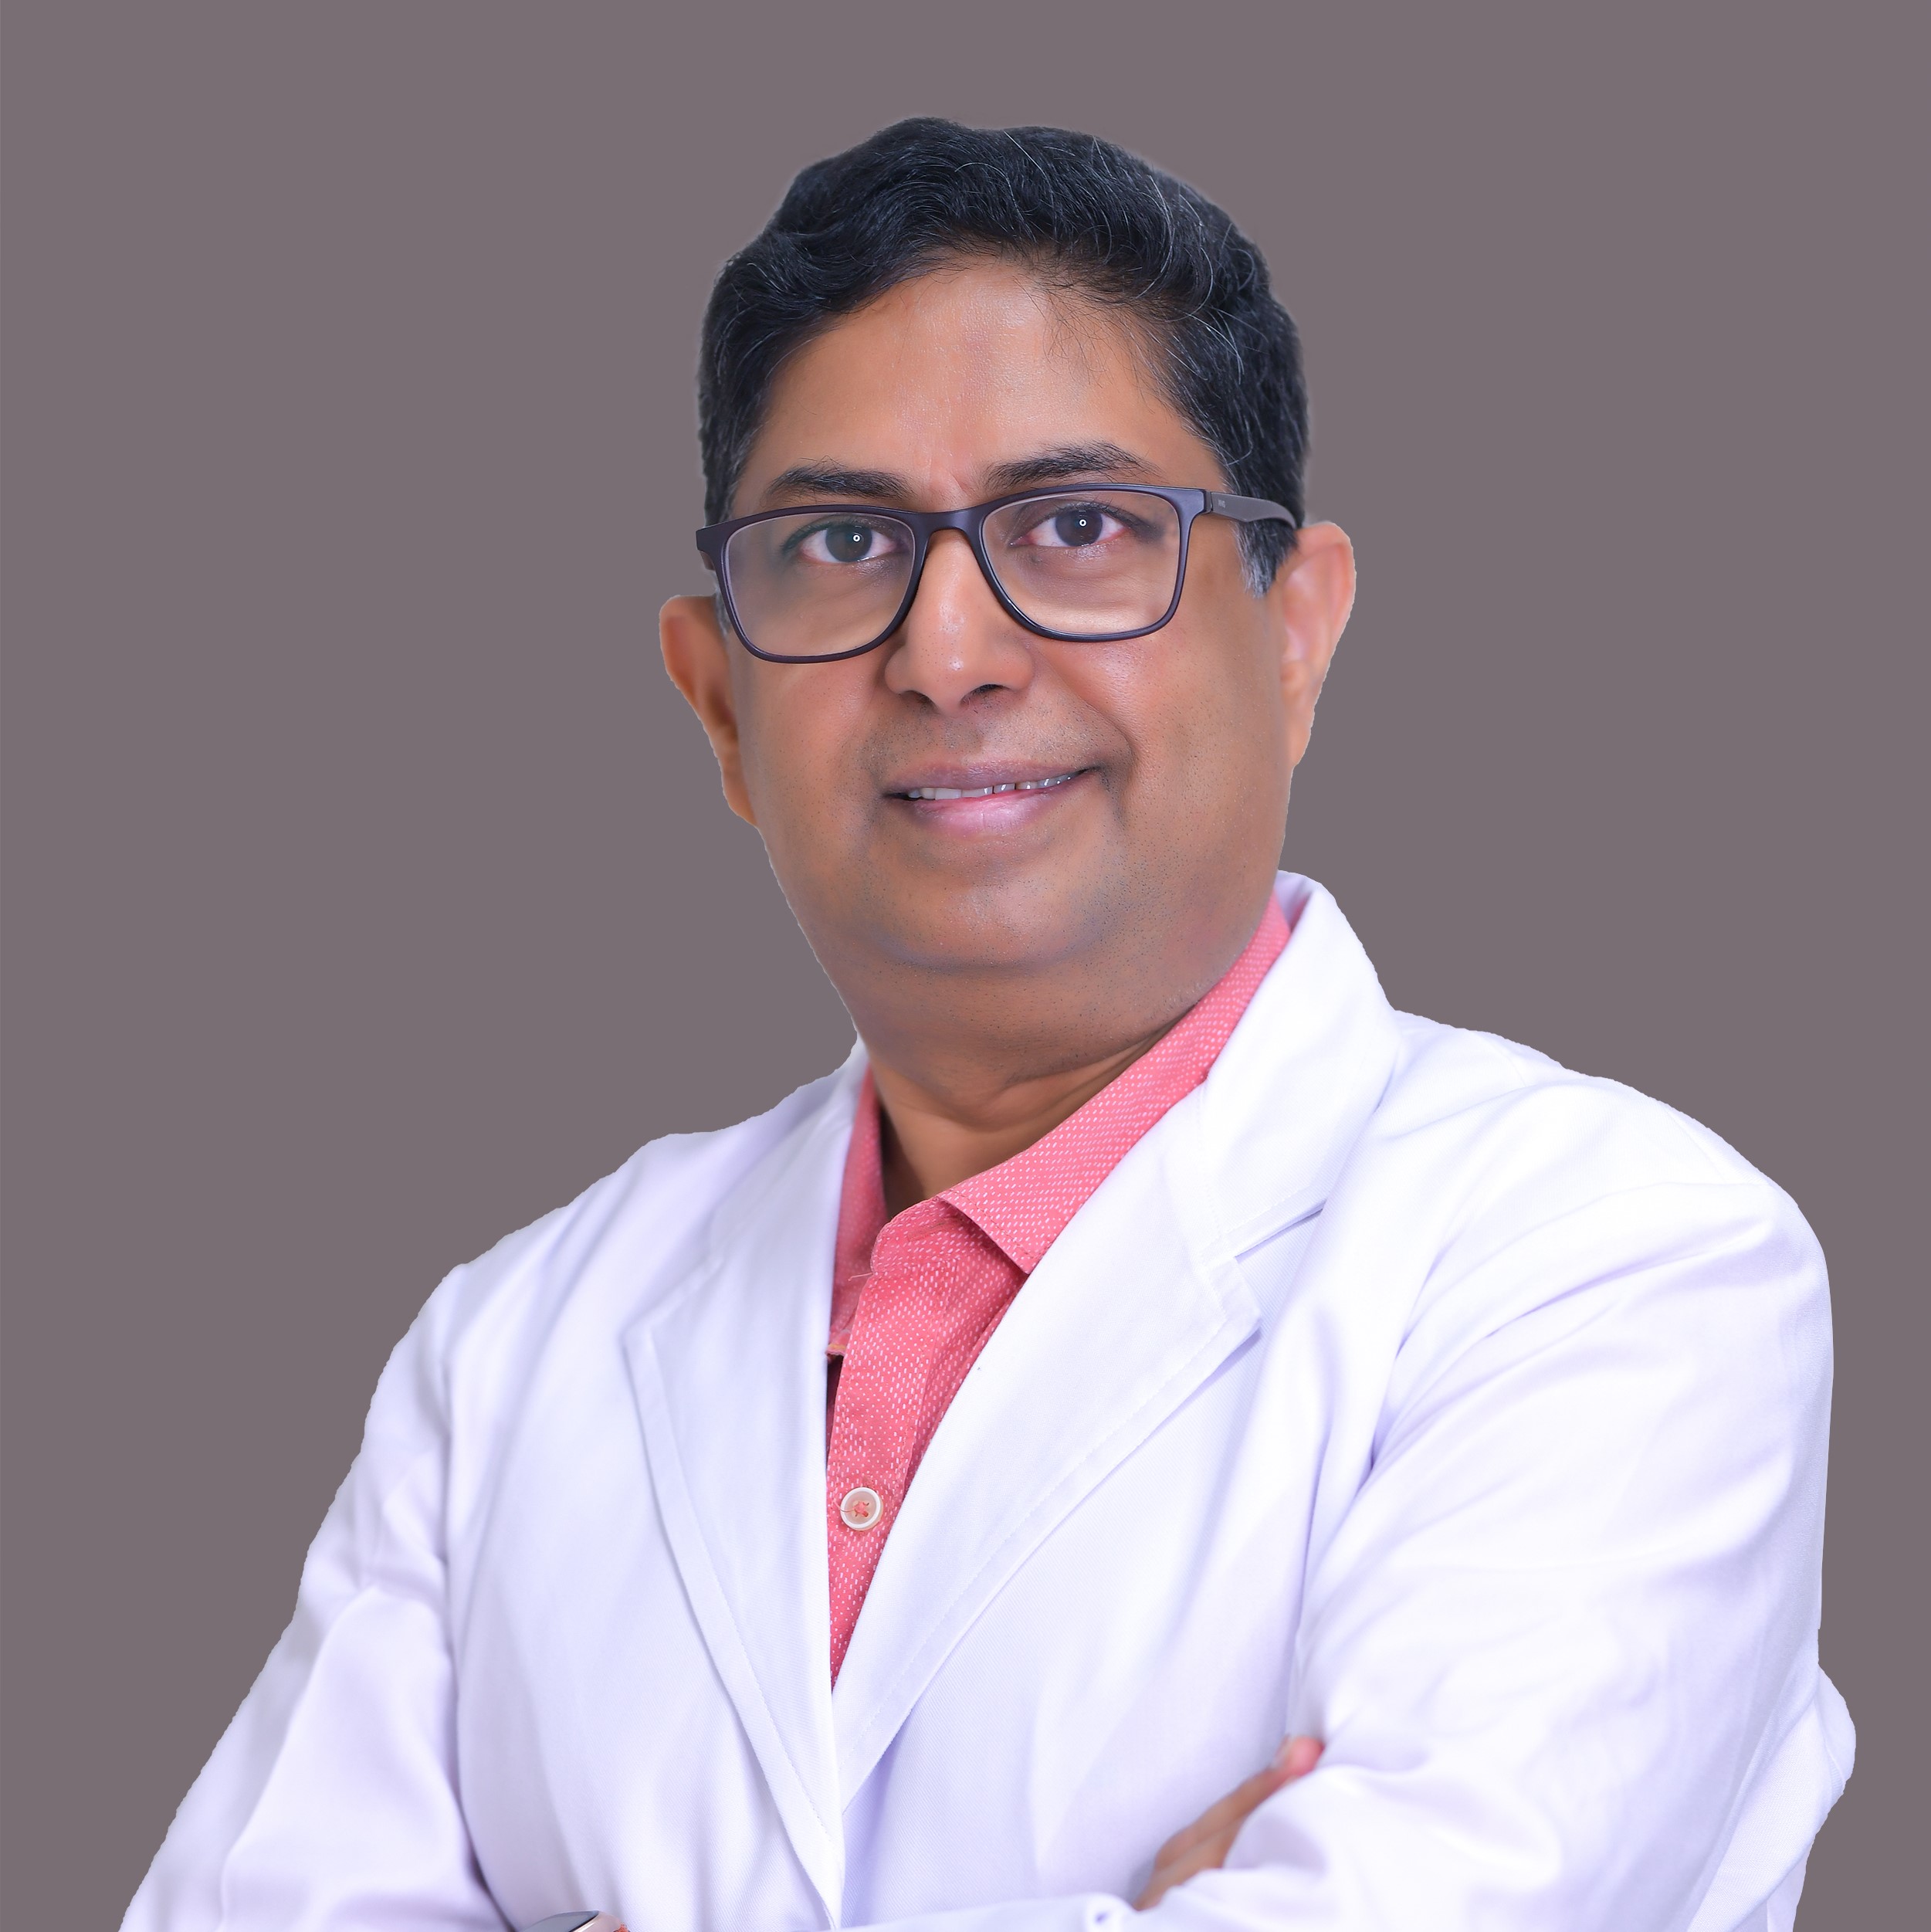 Dr. Anudath Brahmadathan